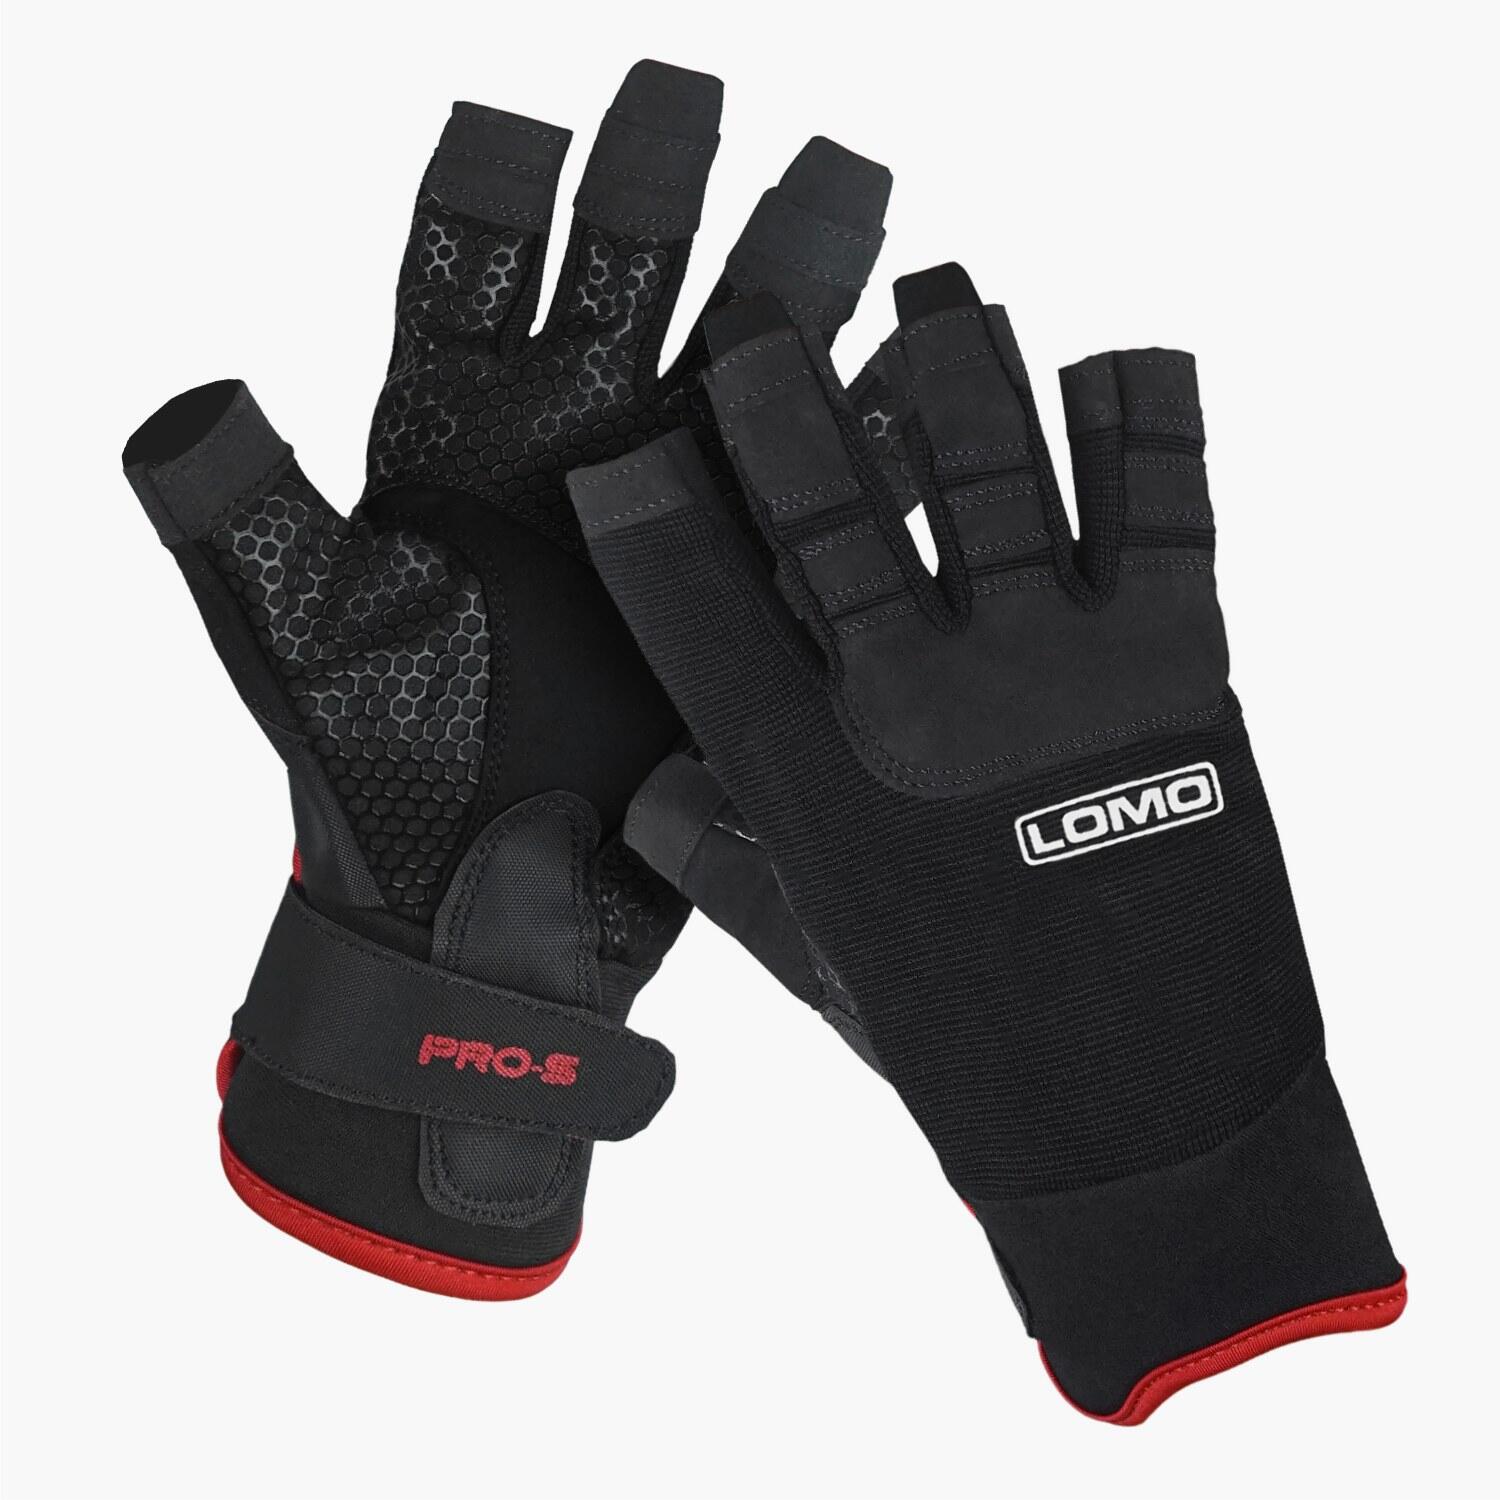 Lomo Sailing Pro-S Gloves - Short Finger 6/8